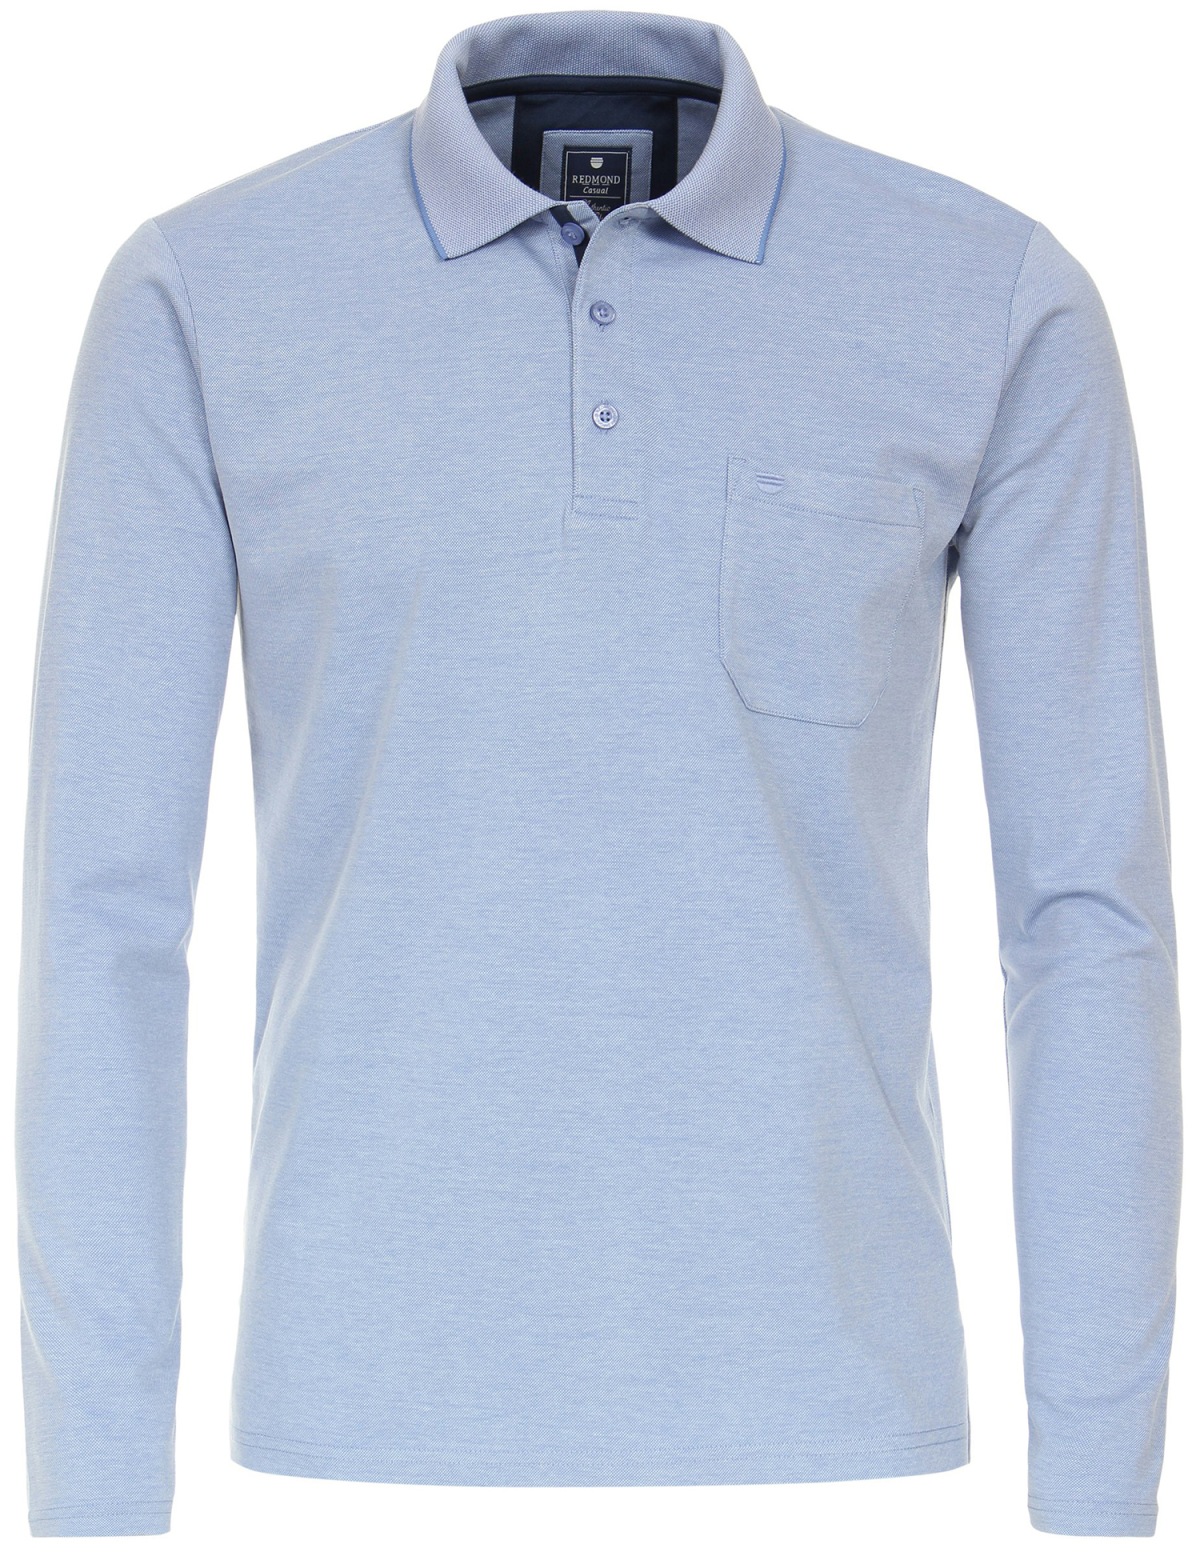 Redmond - Poloshirt - Regular Fit - Langarm - Wash and Wear - hellblau